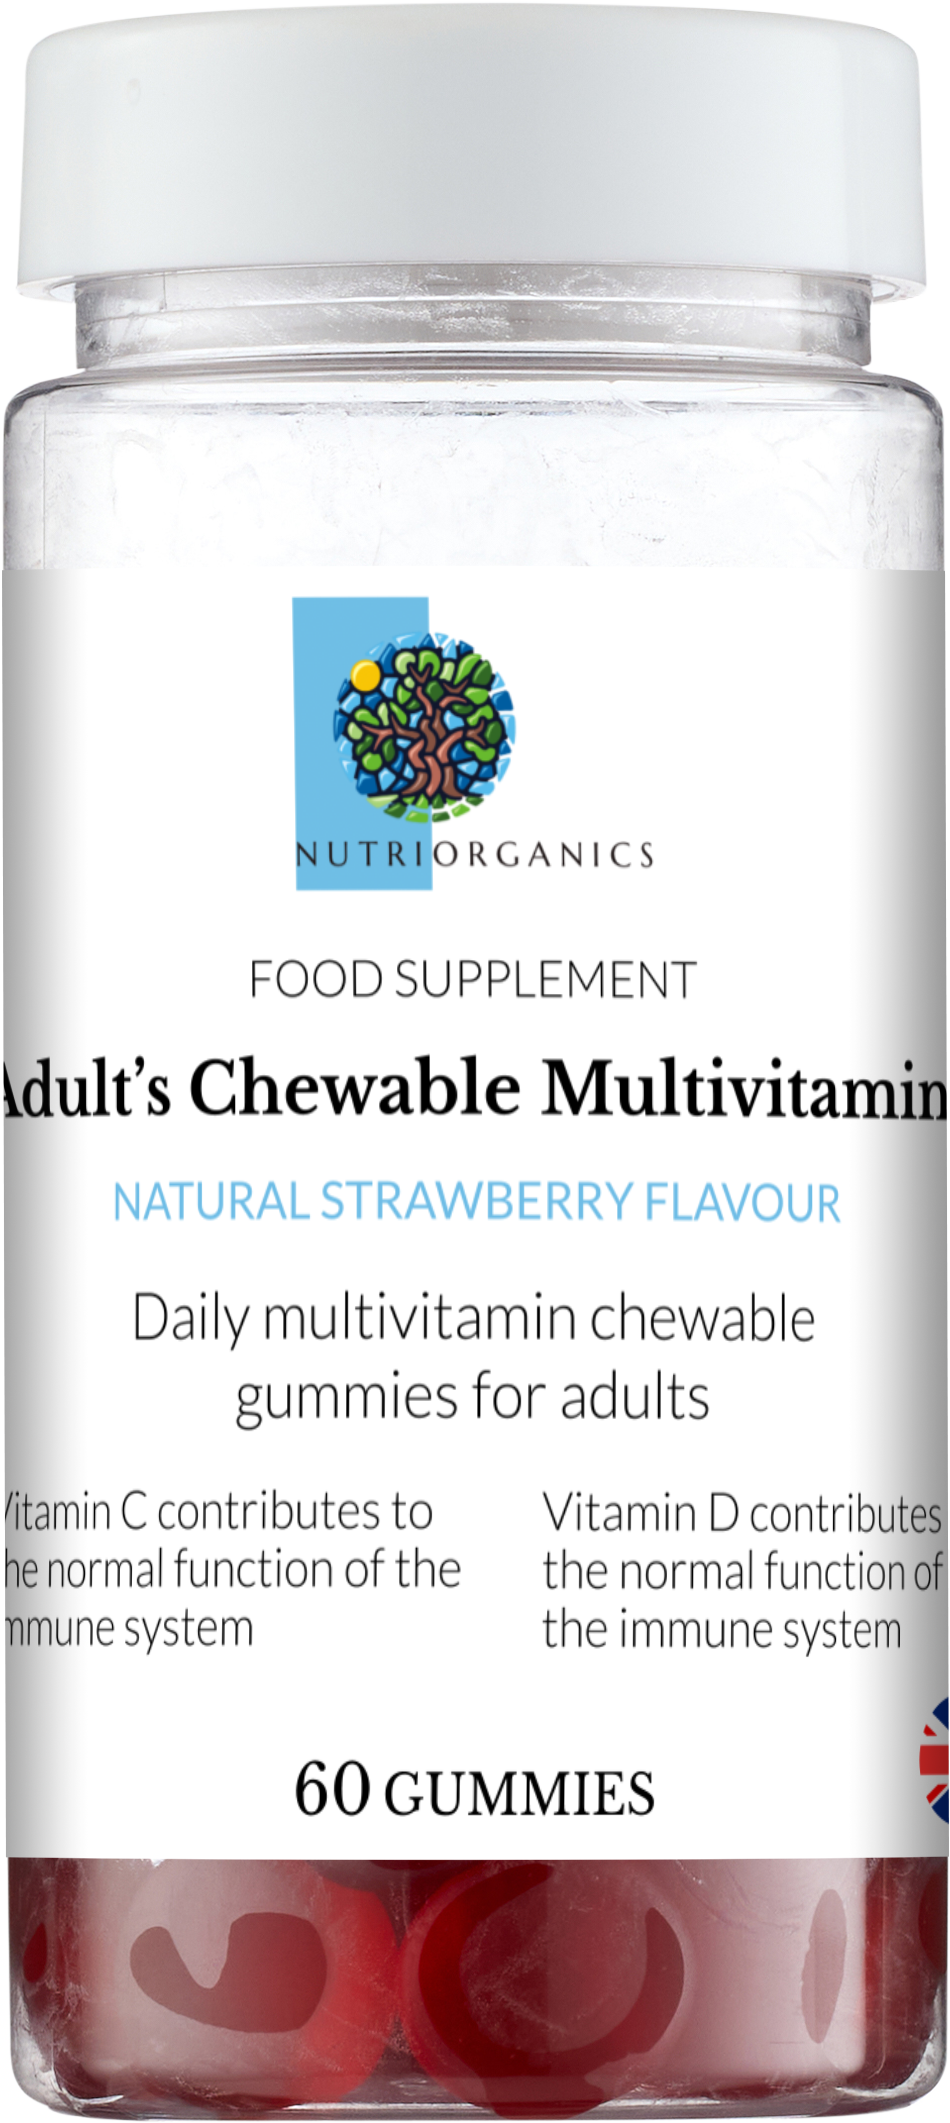 Adult's Chewable Multivitamins